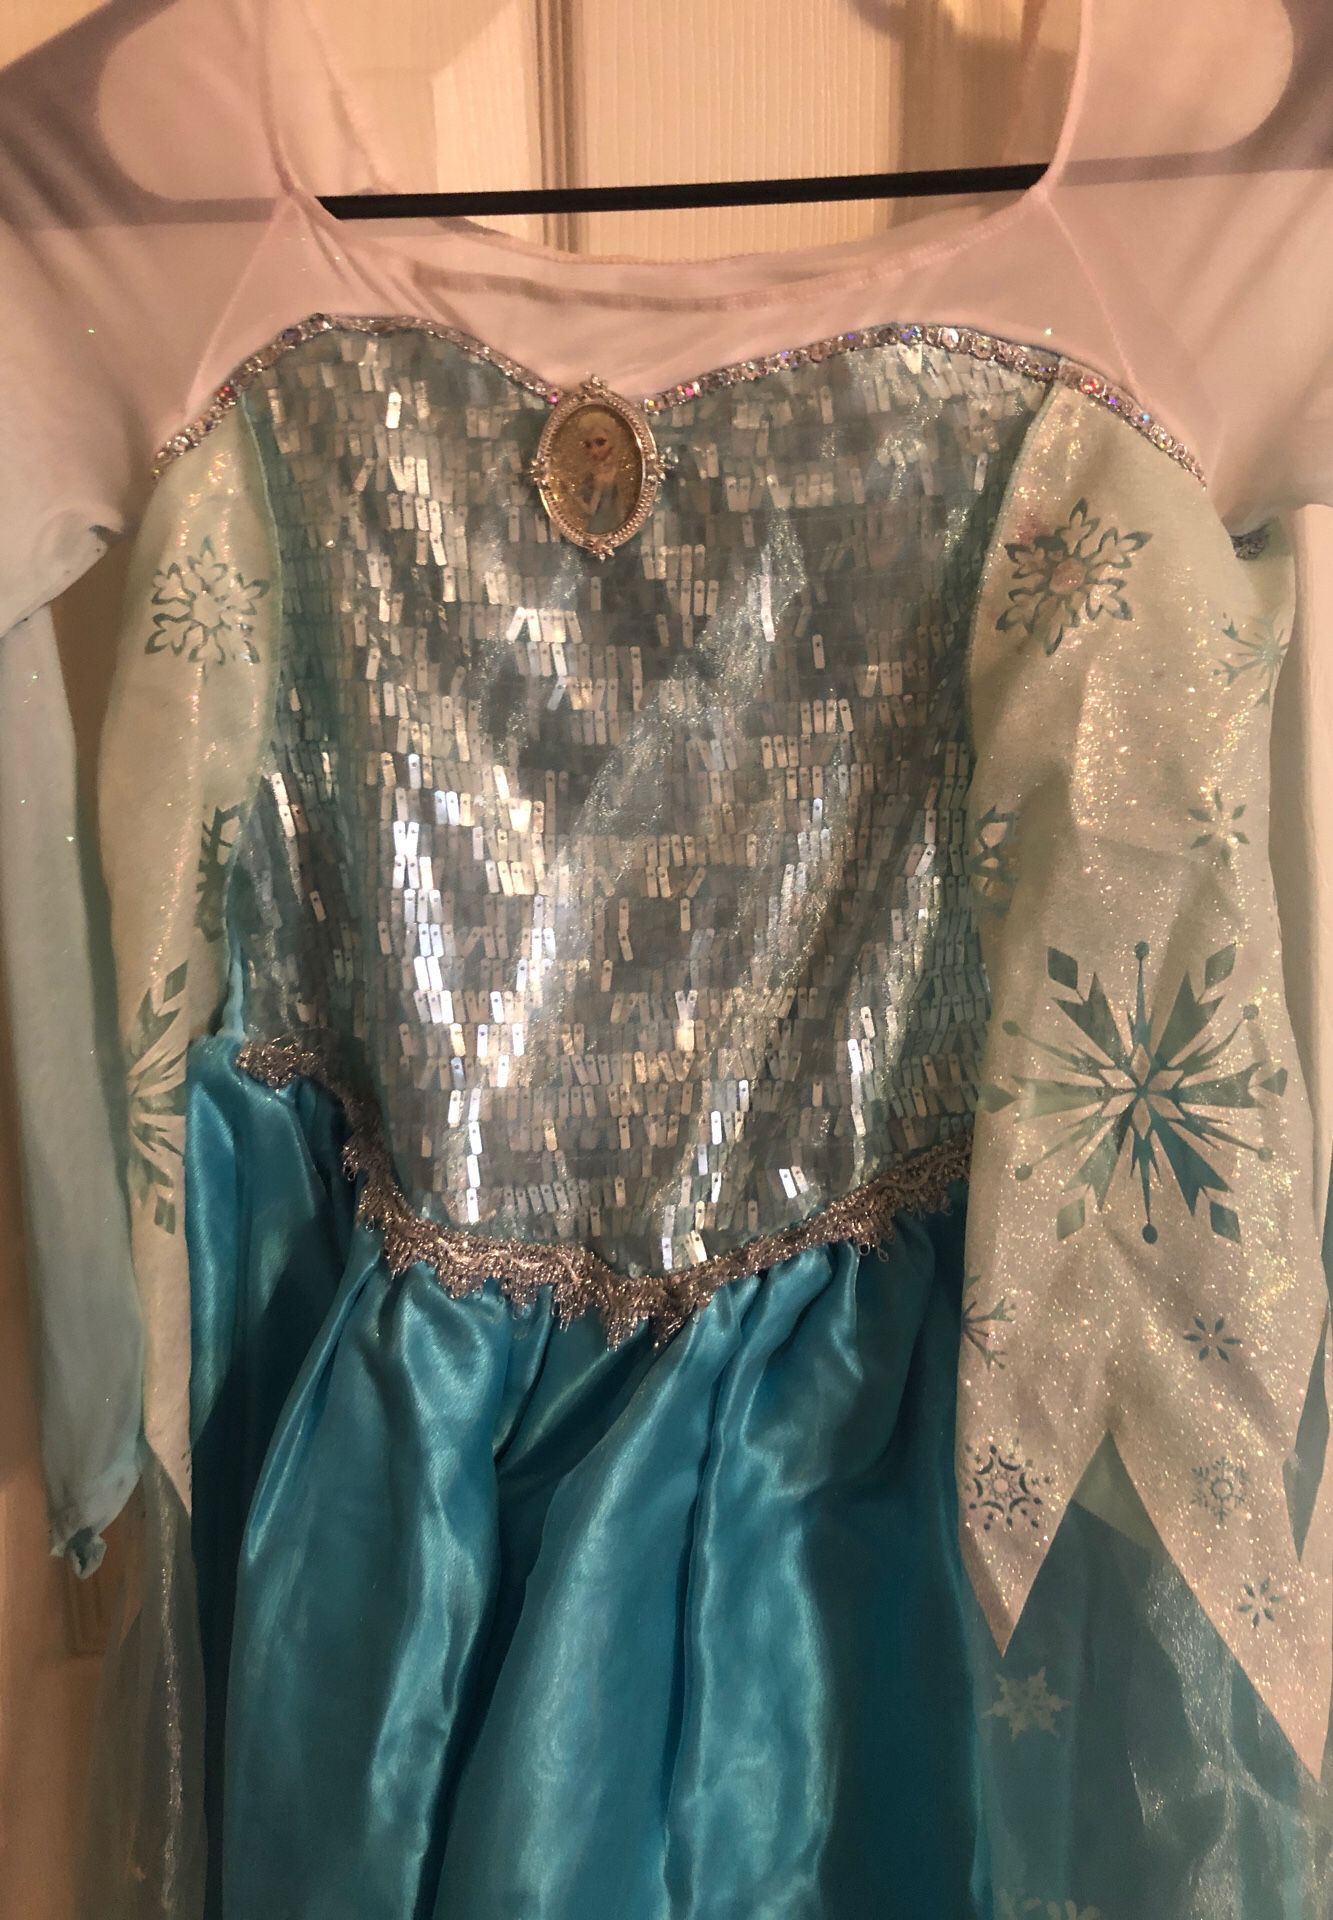 Frozen Elsa dress size 9/10